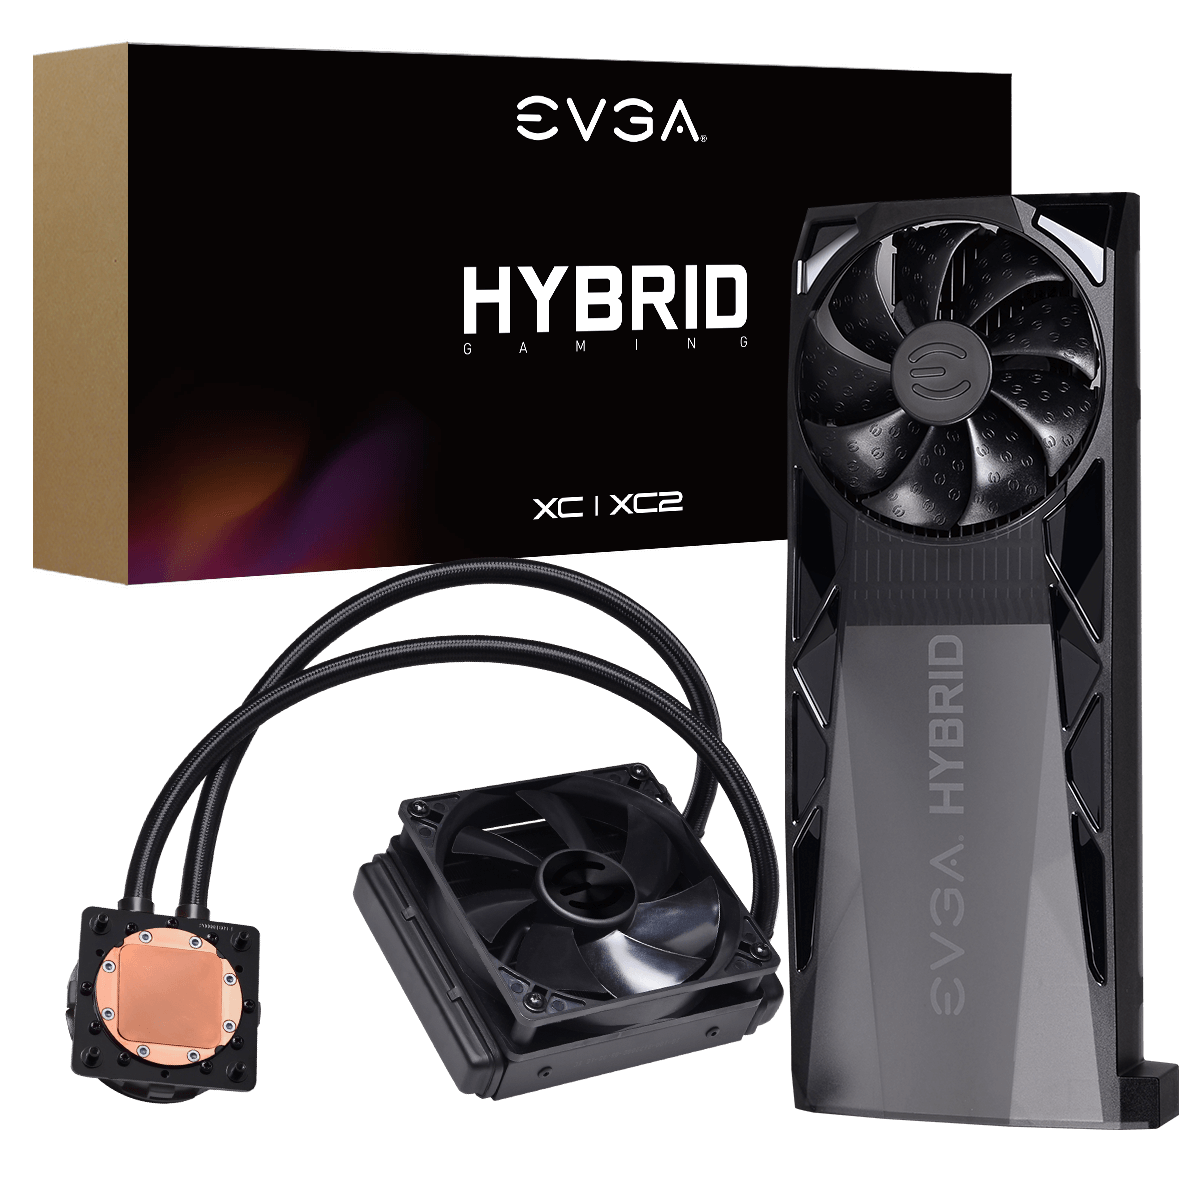 Desværre deformation Whirlpool EVGA - EU - Products - EVGA HYBRID Kit for EVGA/NVIDIA GeForce RTX 2080 Ti  XC/XC2/FE, 400-HY-1384-B1, RGB - 400-HY-1384-B1